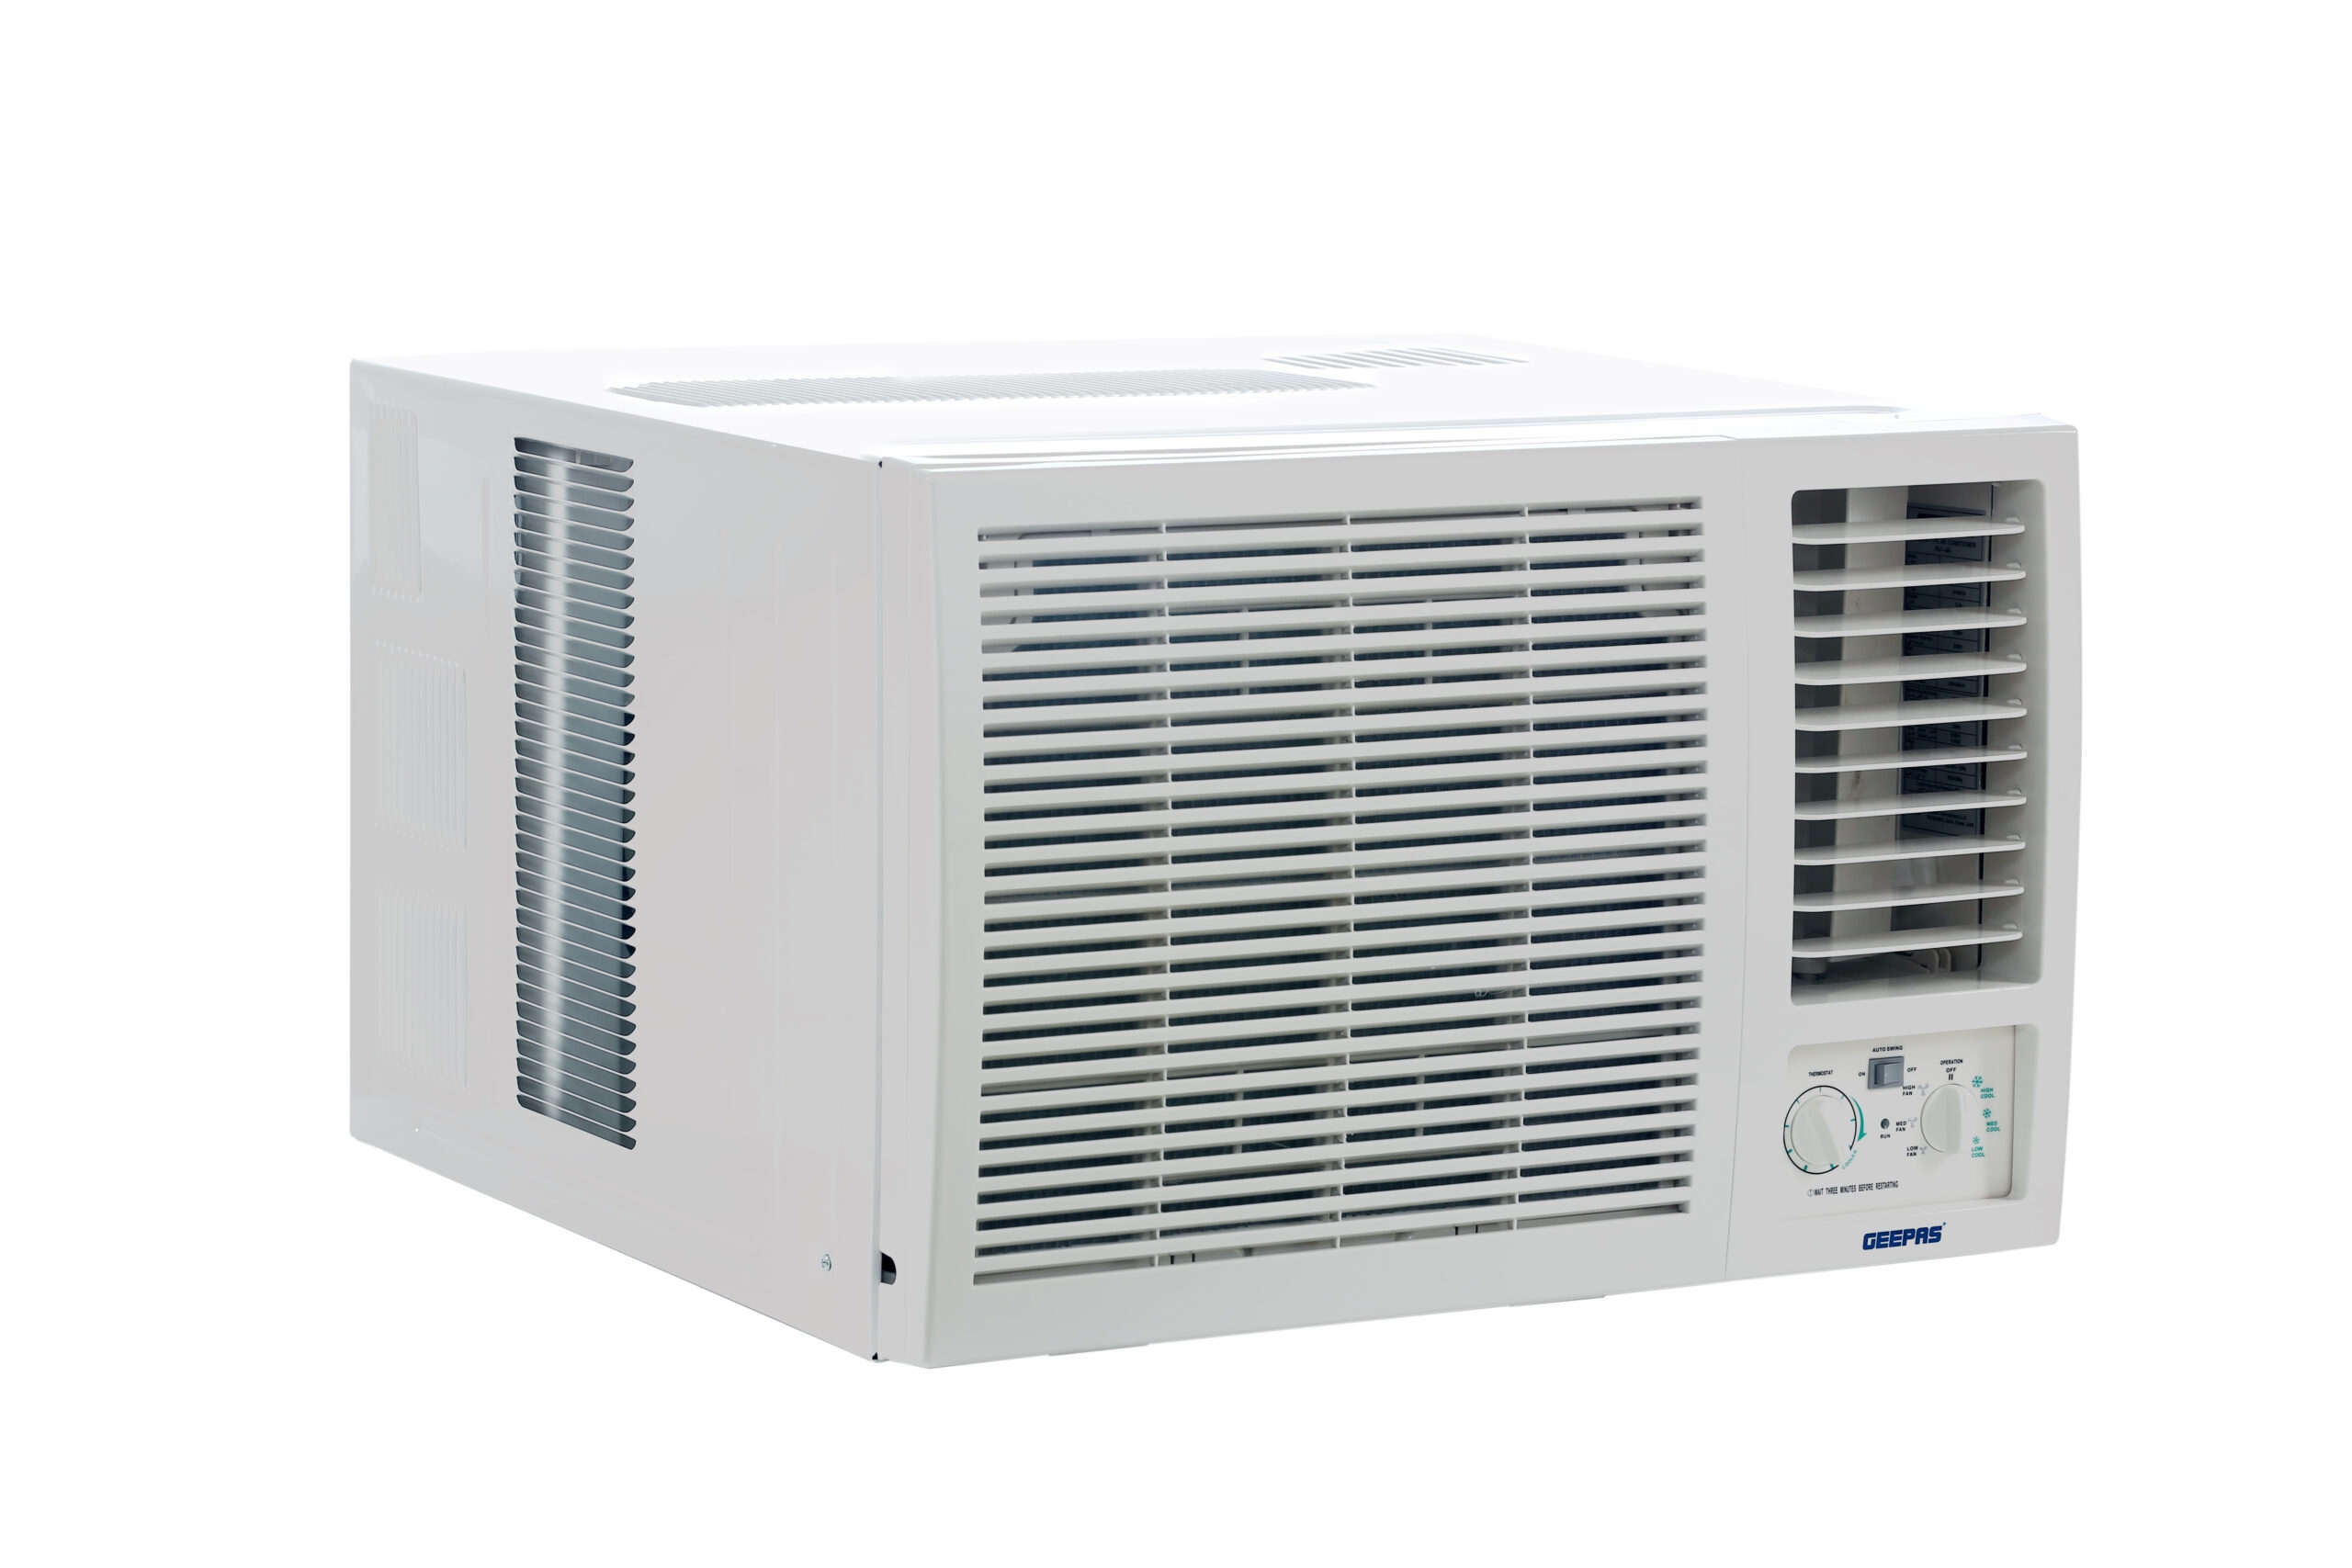 مكيف شباك جيباس 1.5 طن Geepas Window Type Air Conditioner